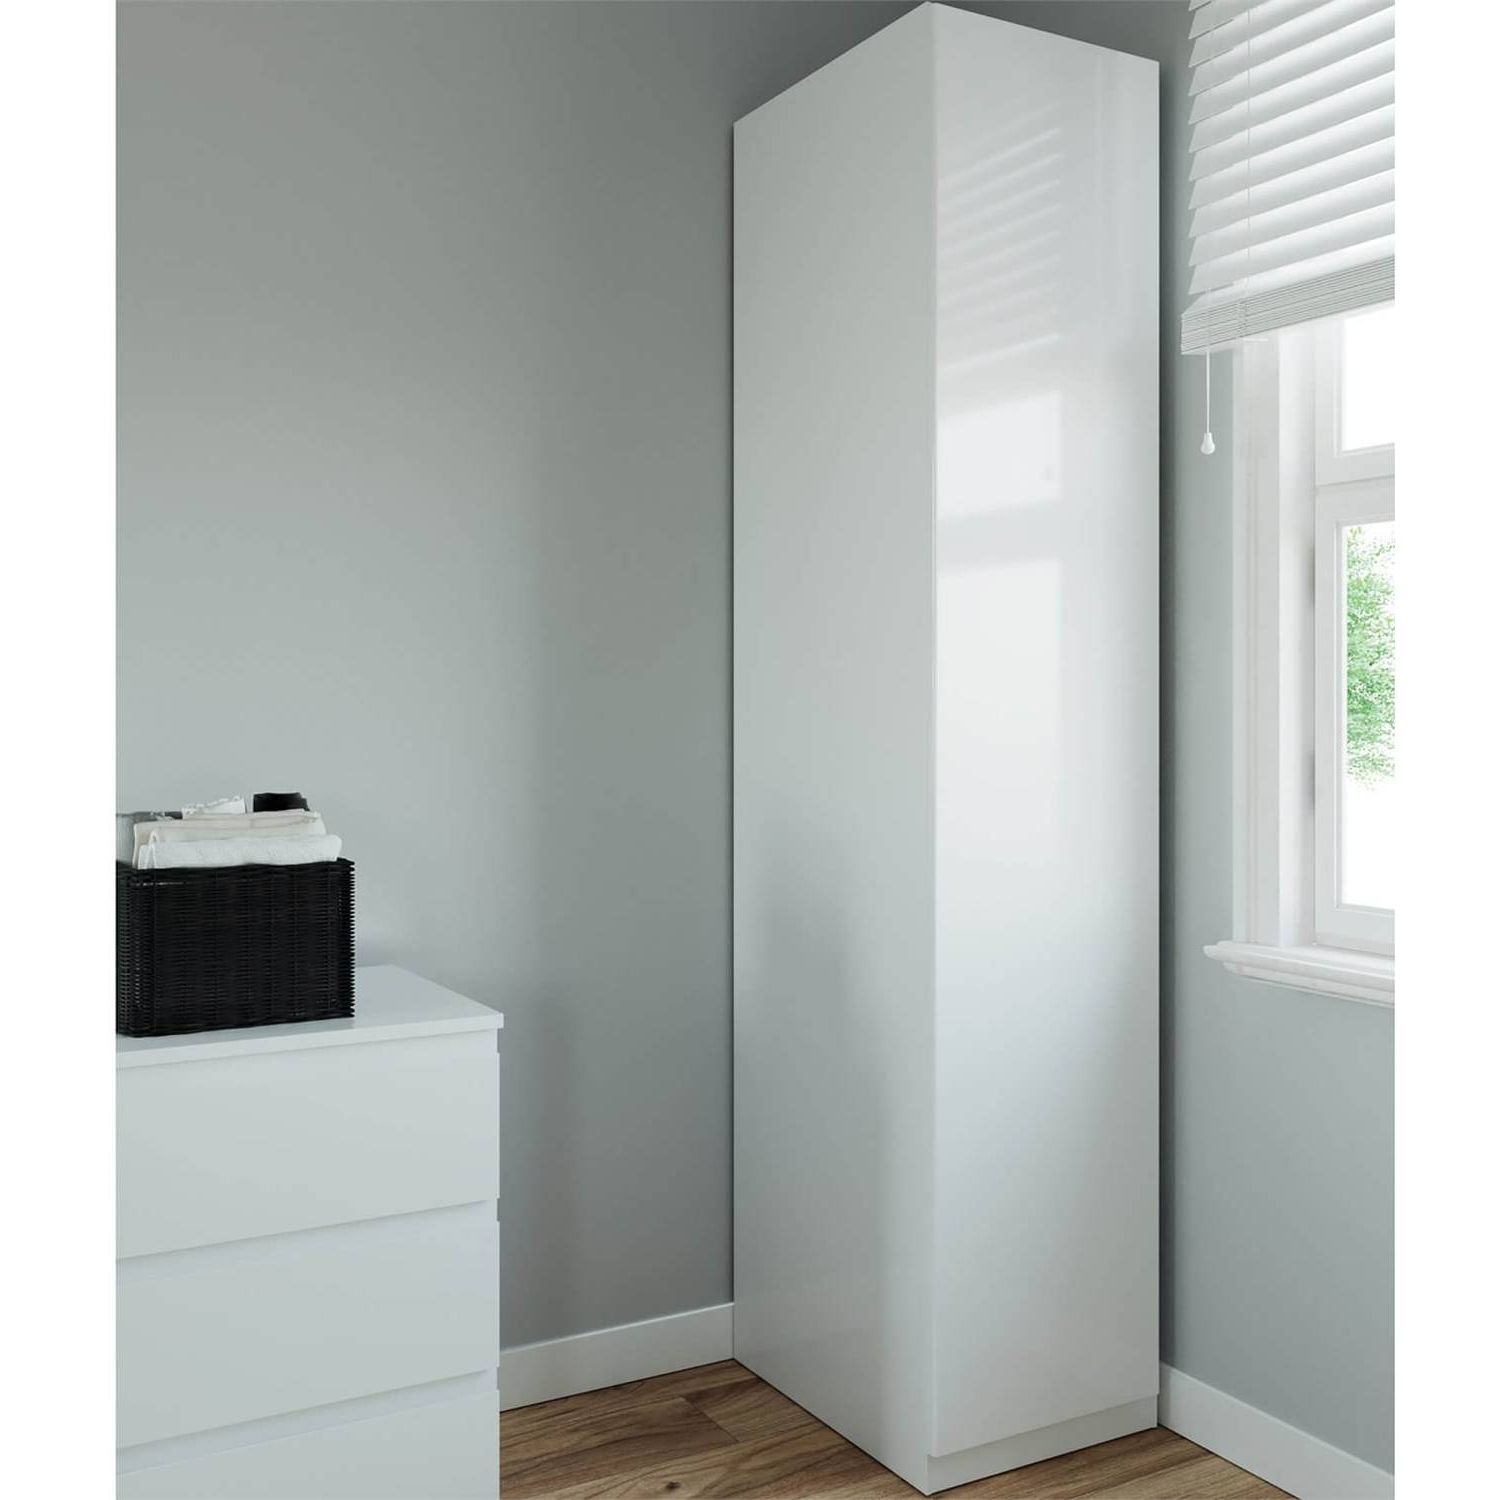 Fitted Bedroom Handleless Single Wardrobe – White | Homebase Inside Single White Wardrobes (Gallery 1 of 20)